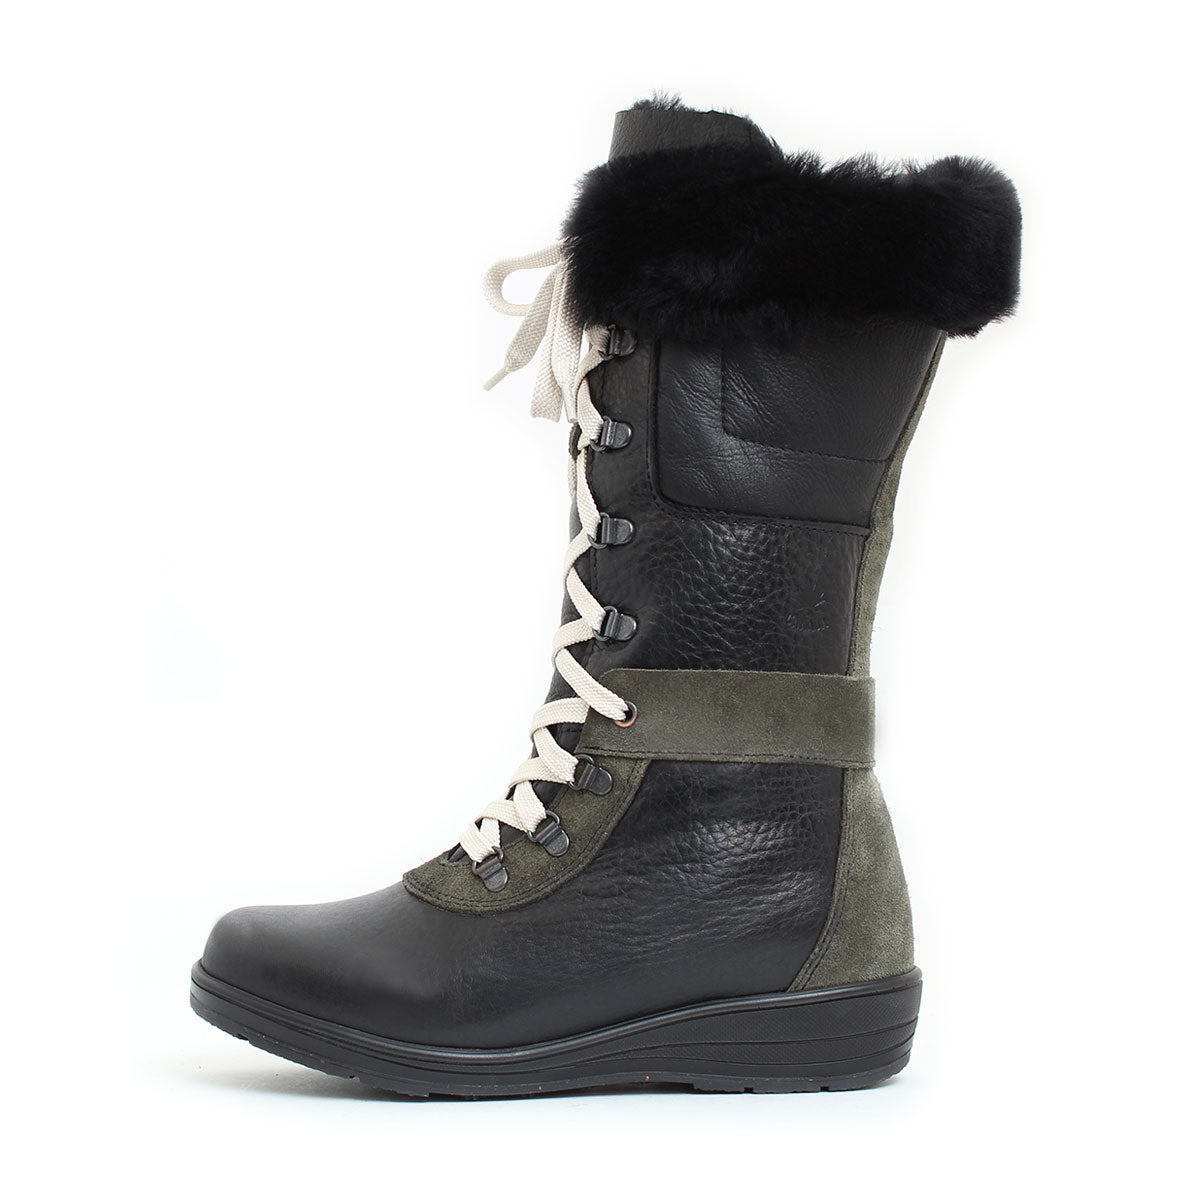 Maggie winter boot for women - Tan-Grey